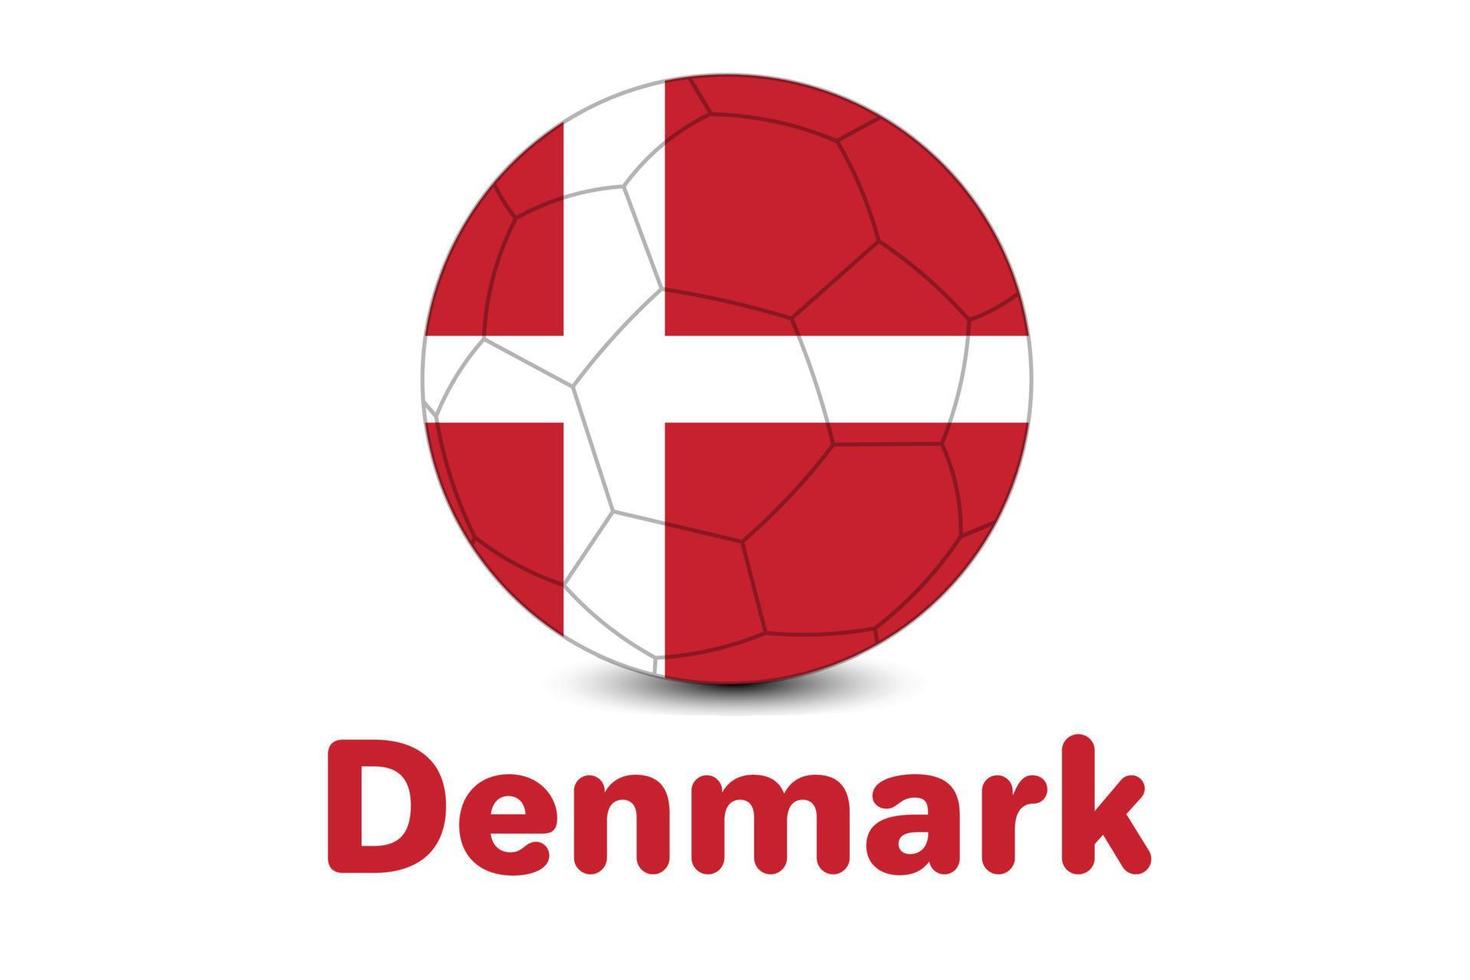 Denmark Flag For Football Worldcup 2022. Qatar world cup 2022. denmark flag illustration vector